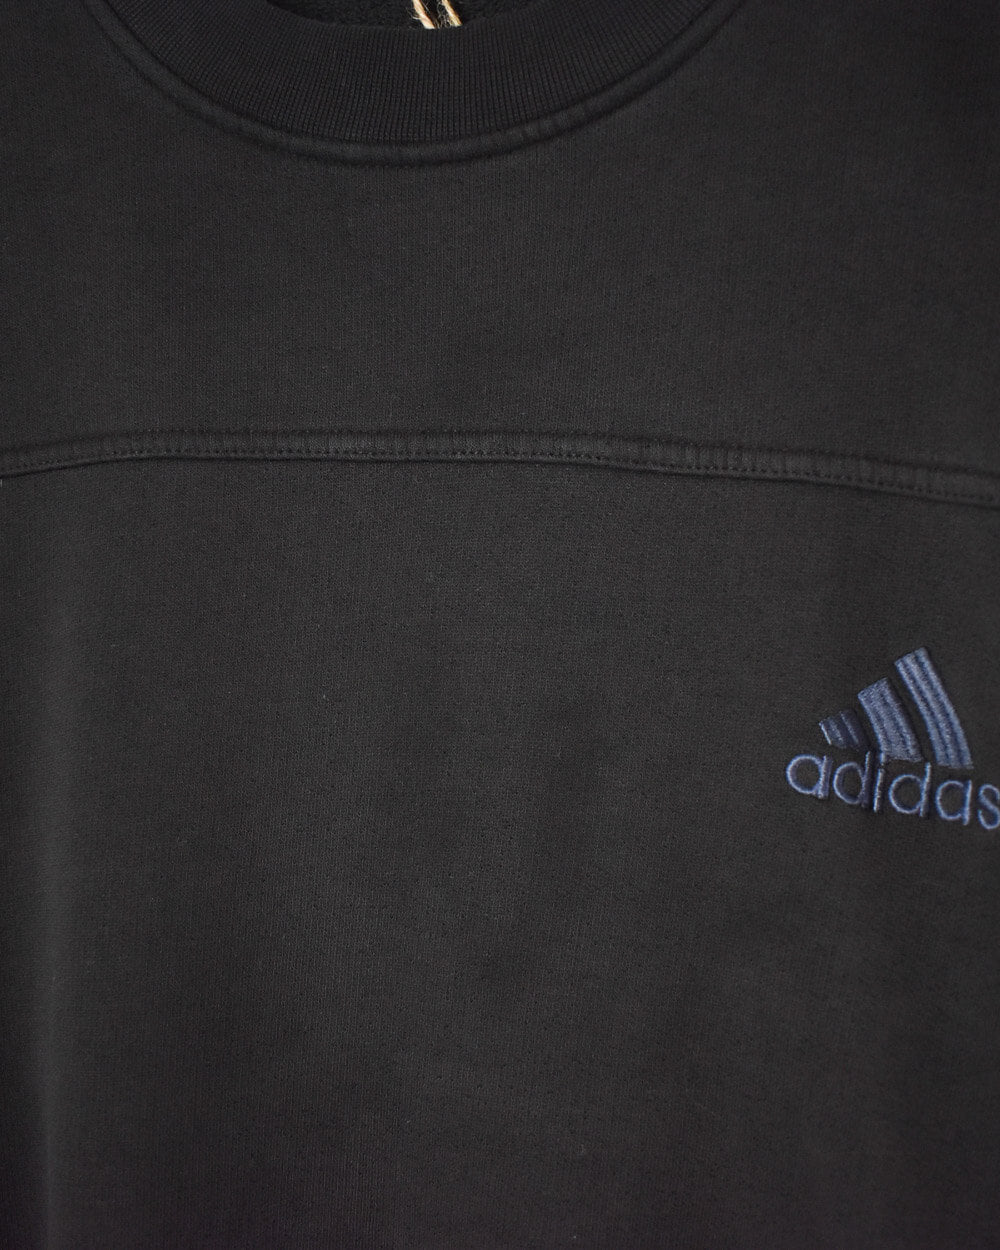 Black Adidas Sweatshirt - X-Large